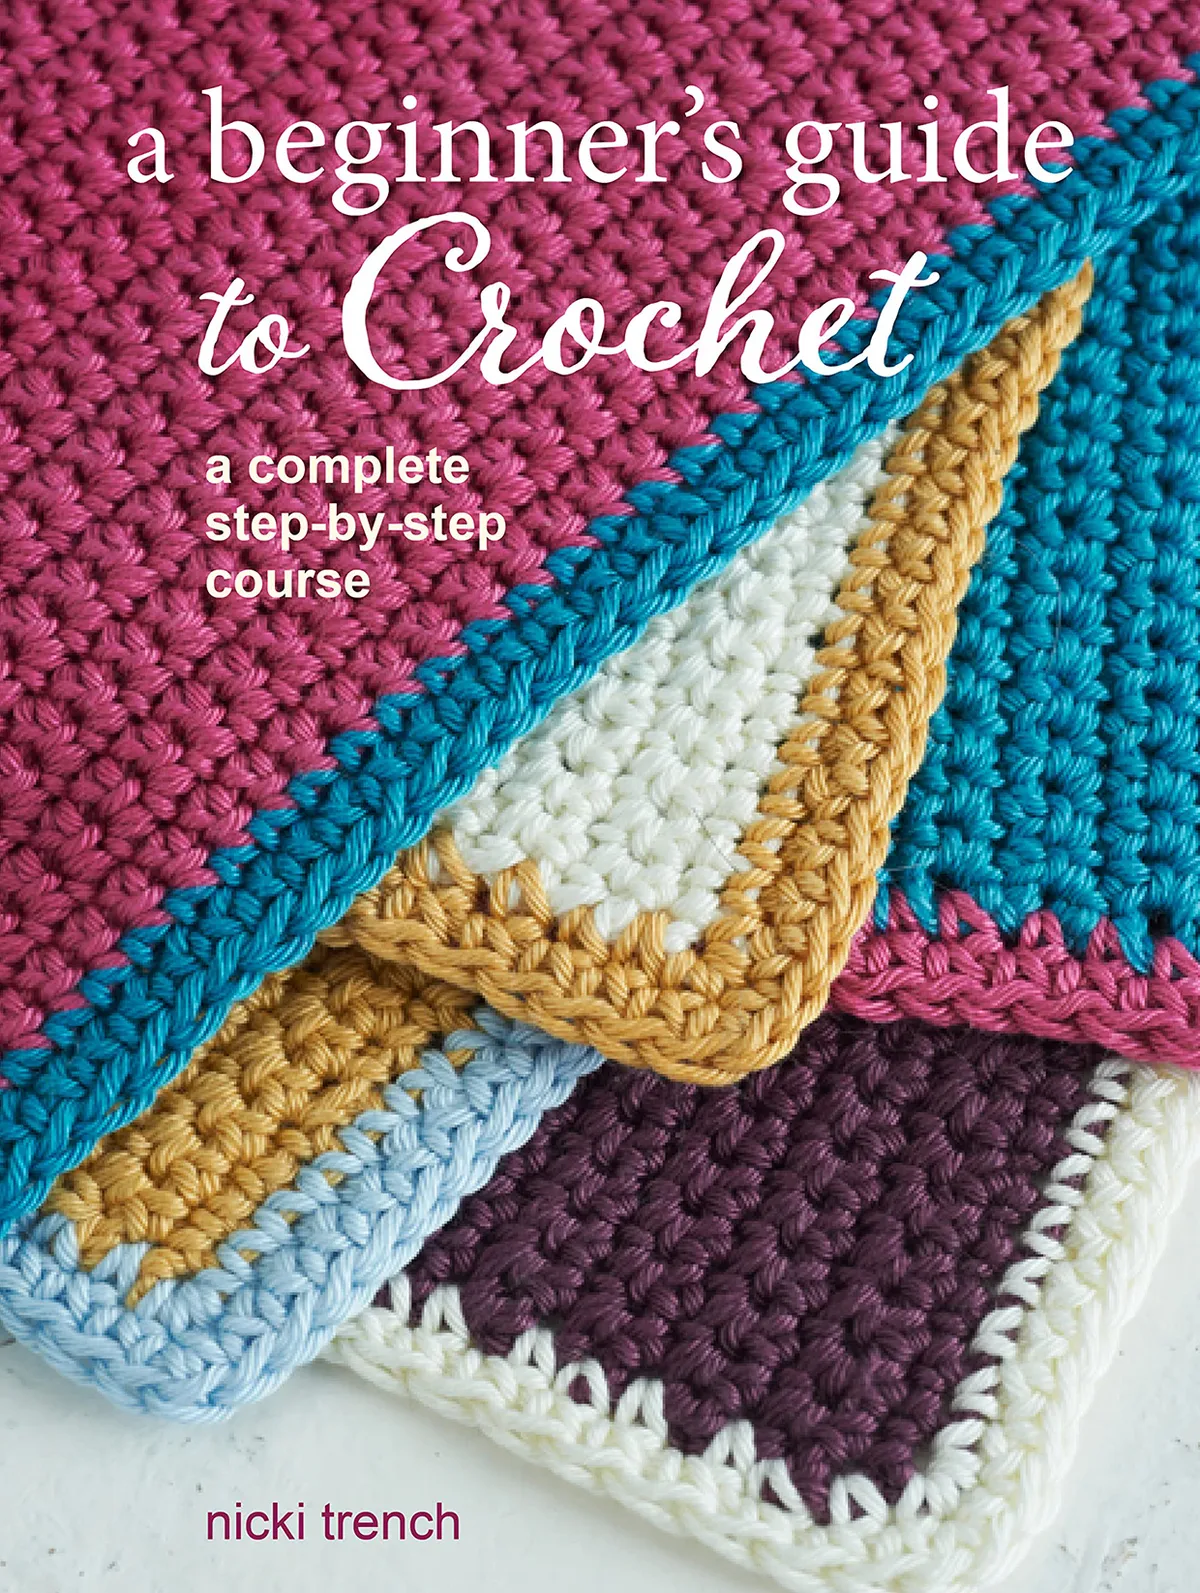 20 Best Crocheting Books for Beginners - BookAuthority